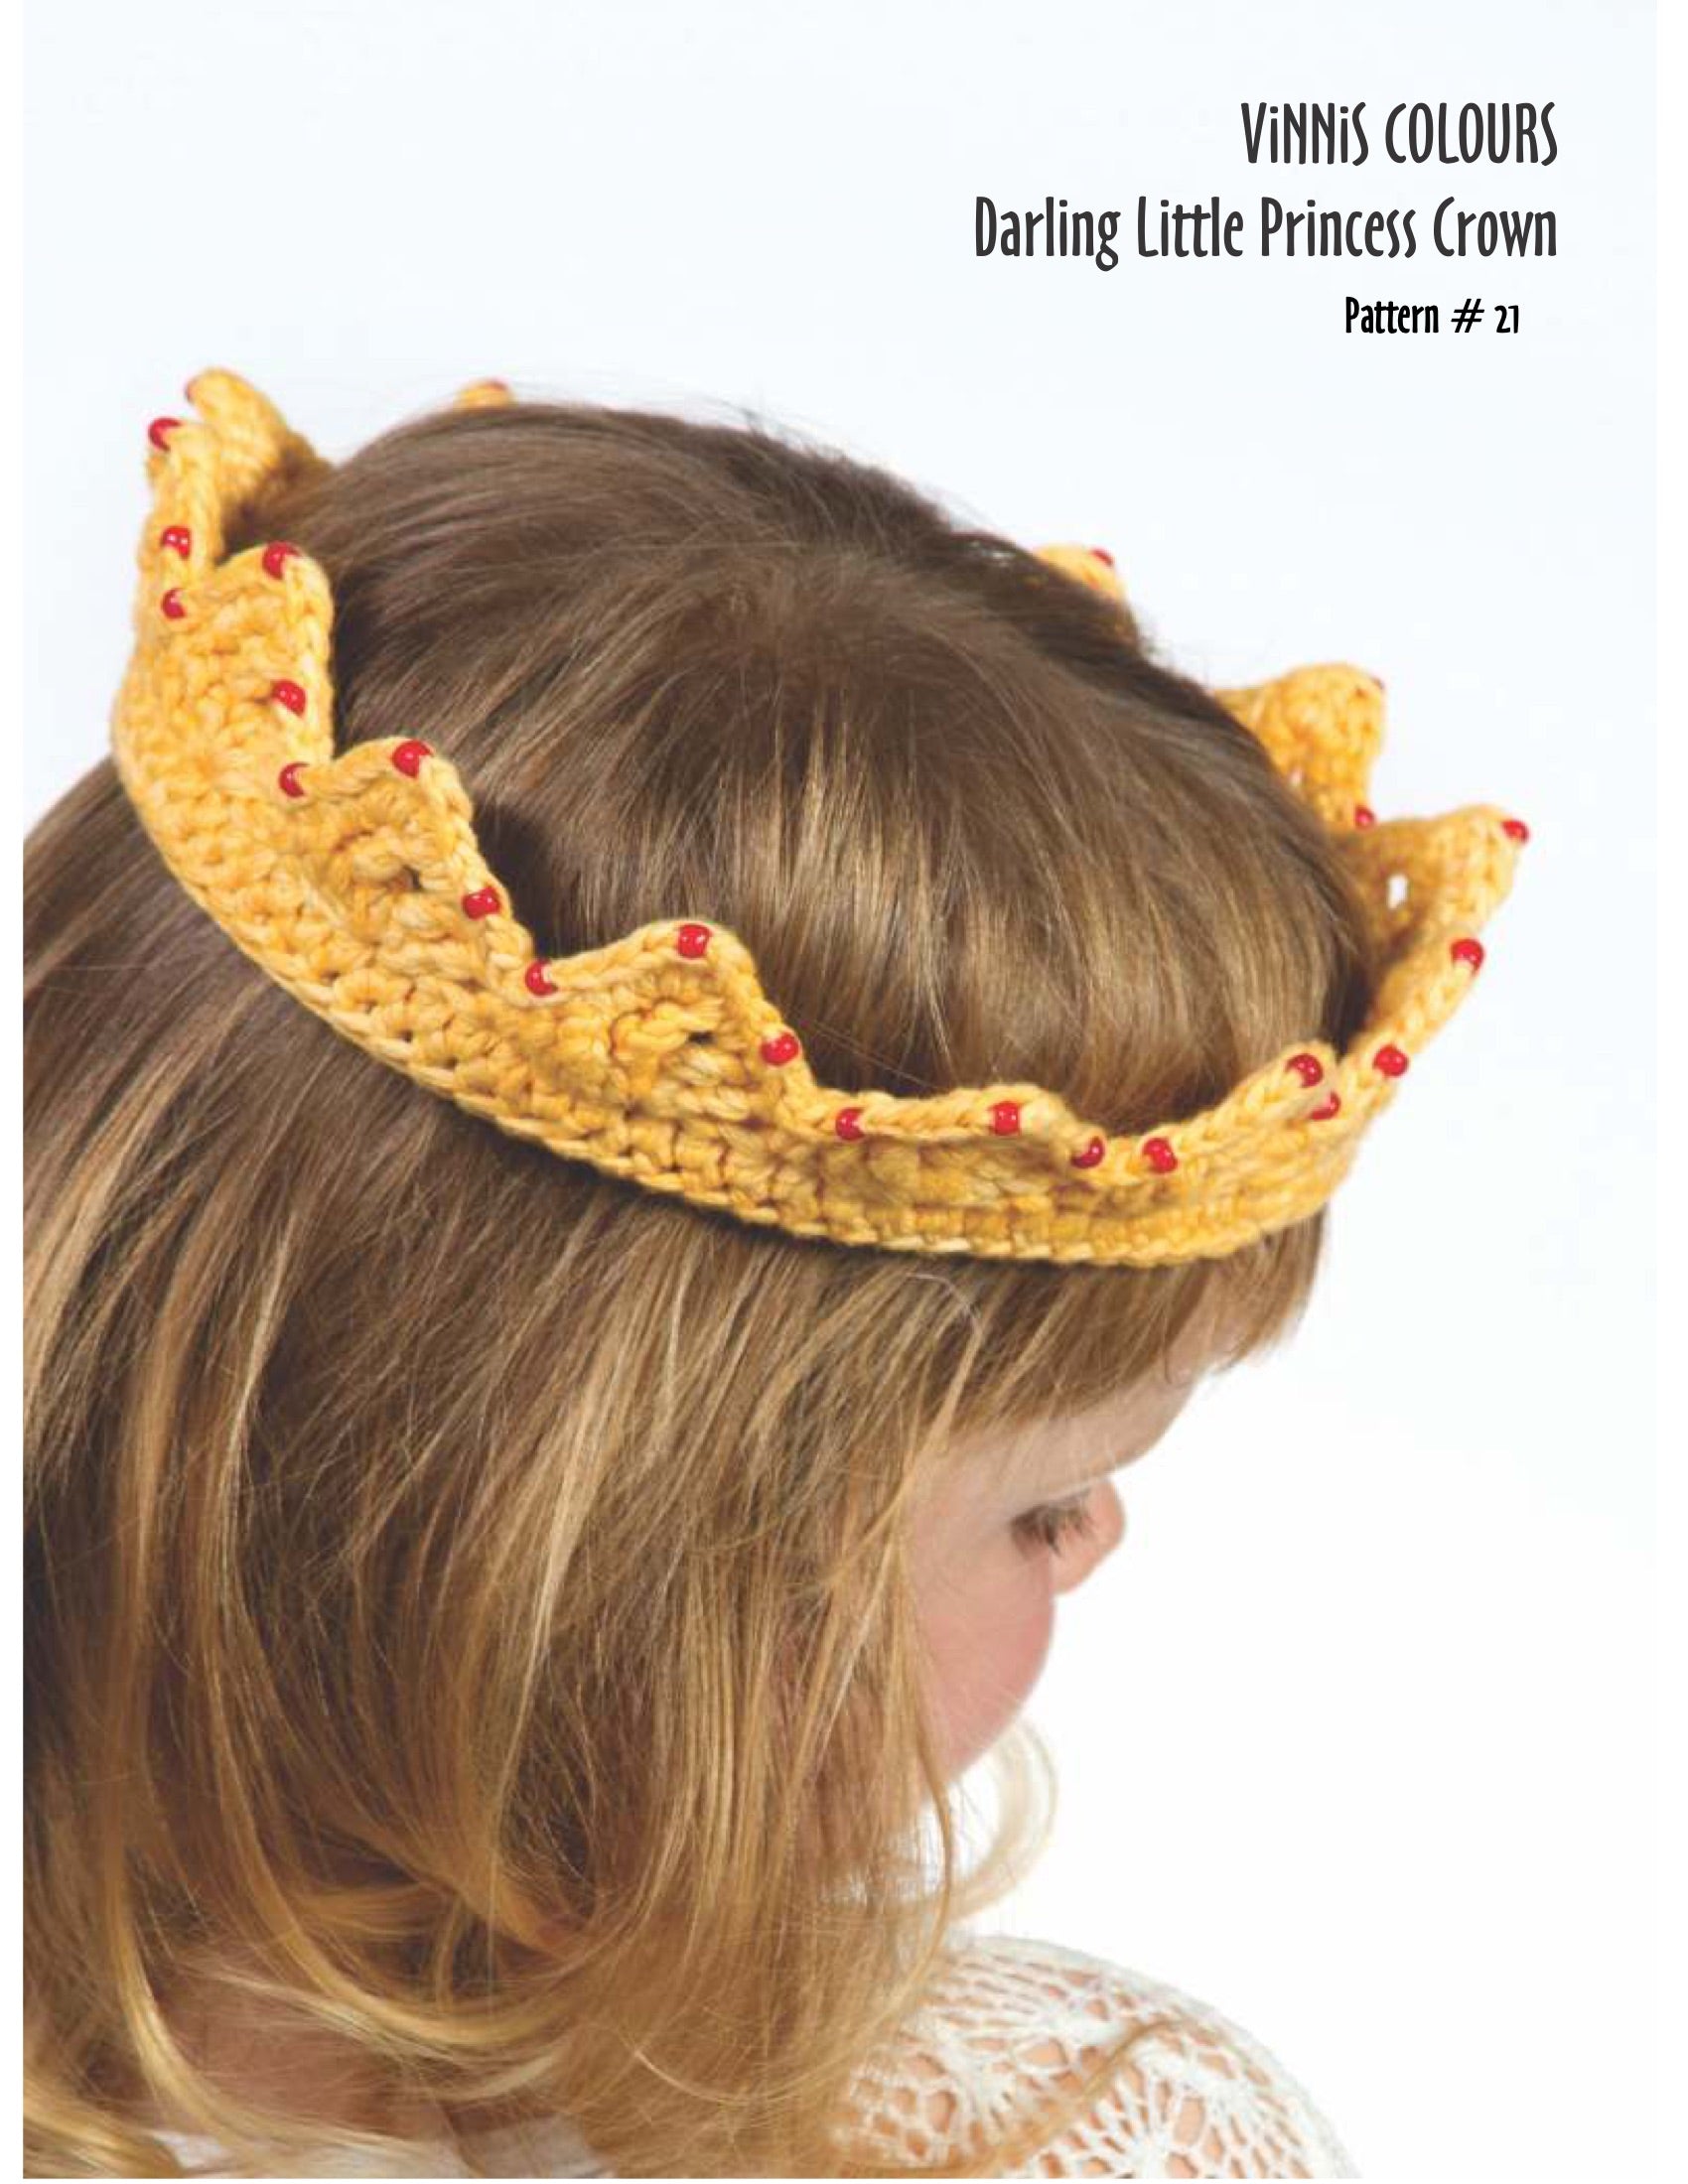 VCDL - P021 - Darling Little Princess Crown